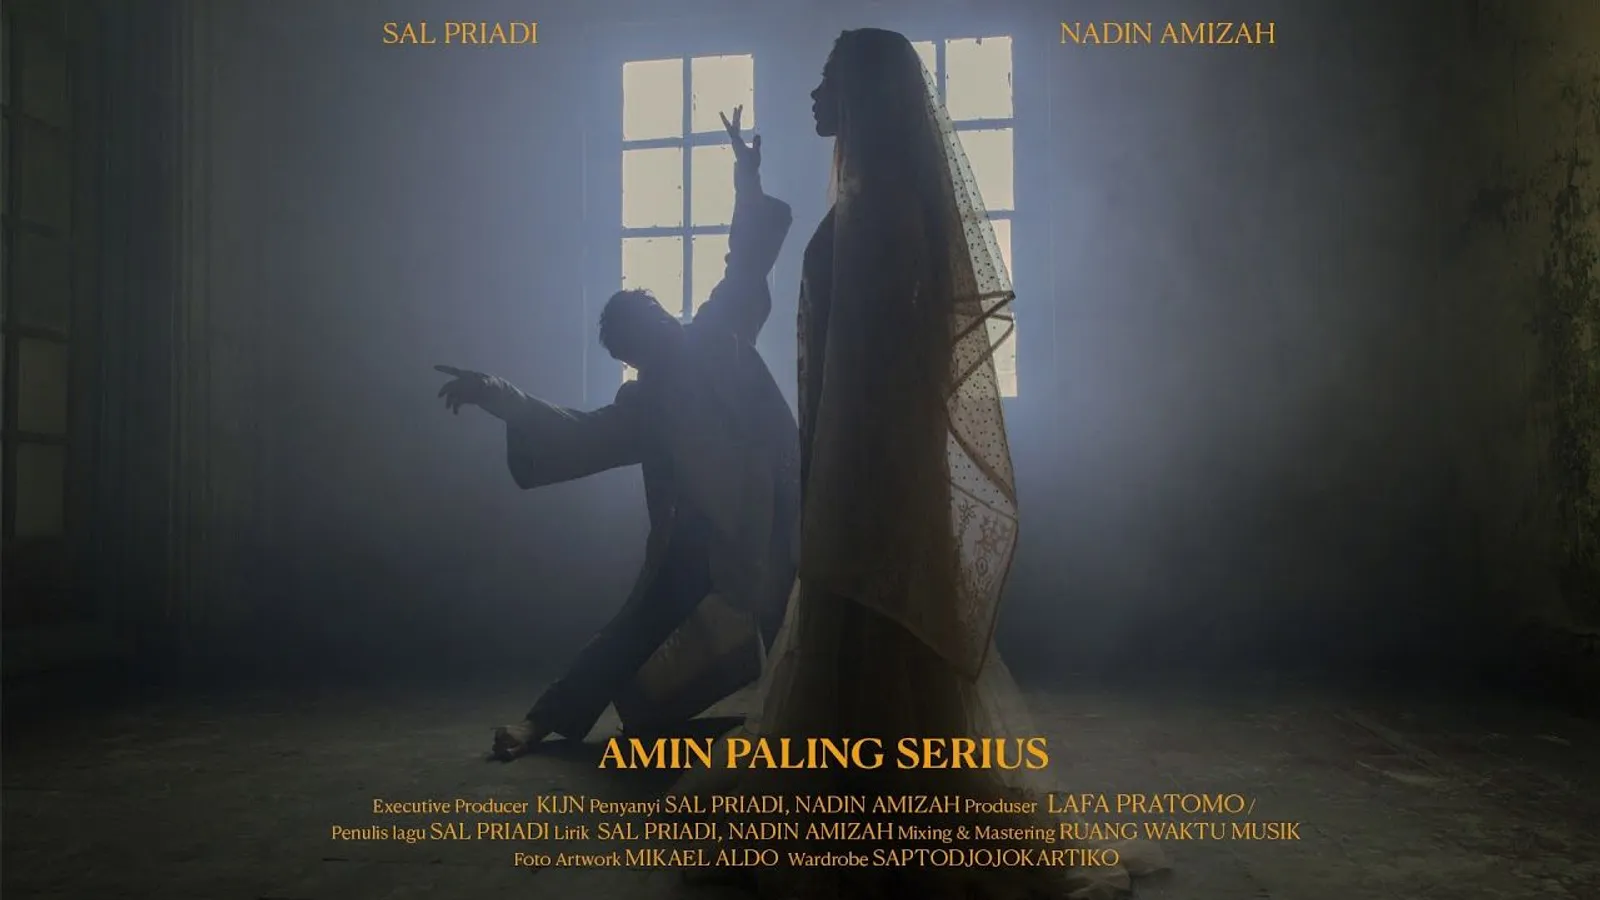 Lirik Lagu 'Amin Paling Serius' Sal Priadi Feat. Nadin Amizah